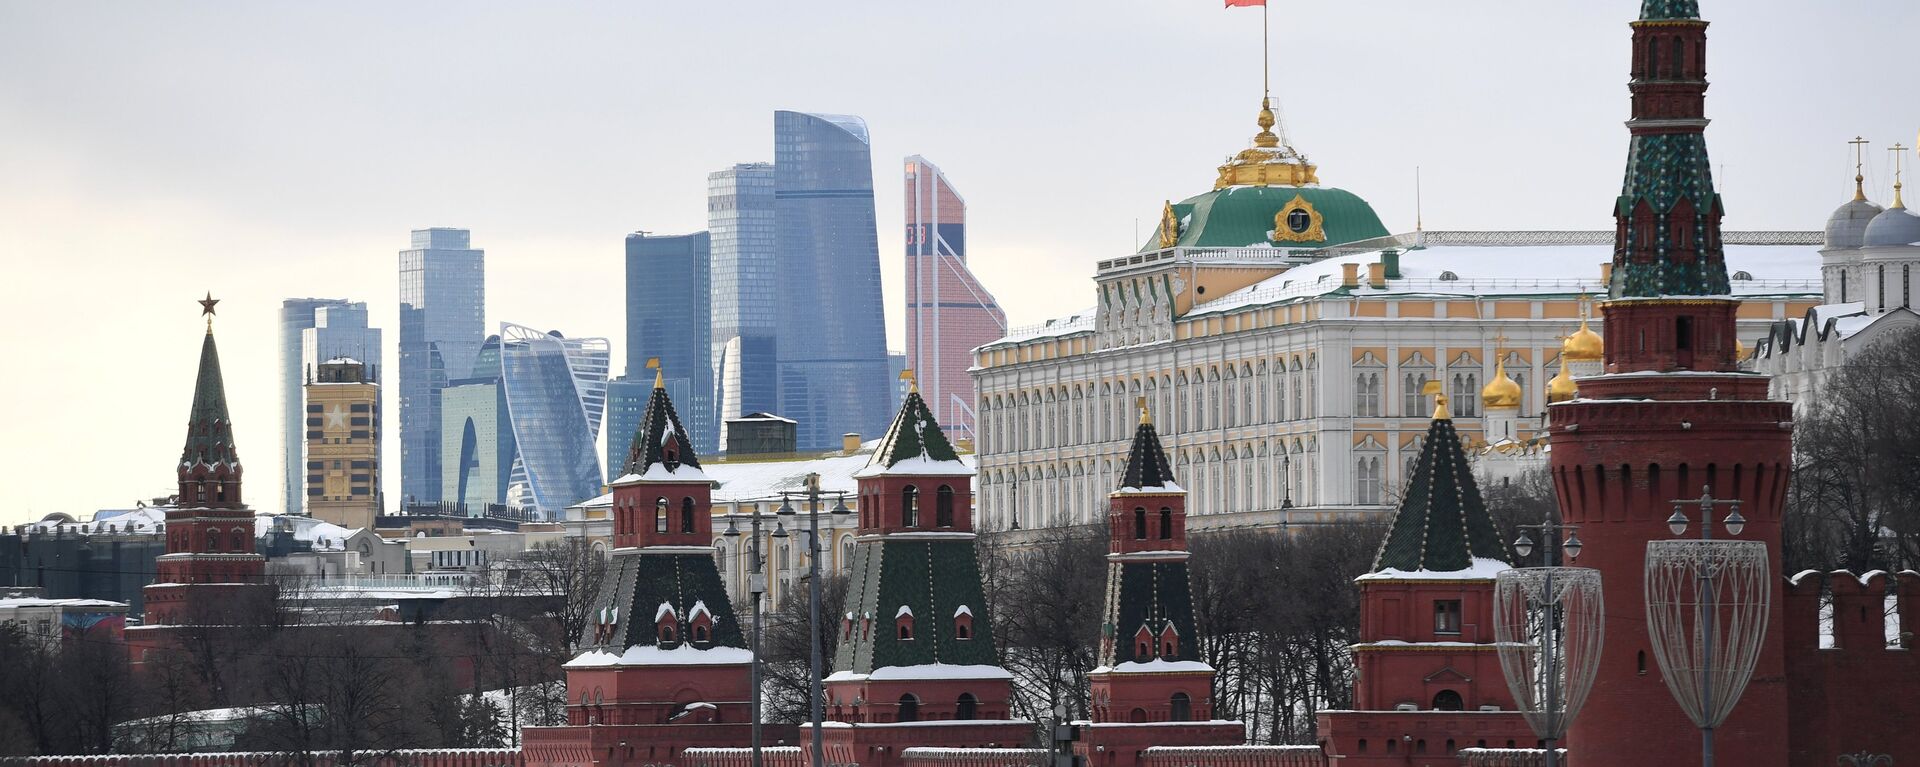 Moscow, Kremlin view - Sputnik International, 1920, 28.12.2022